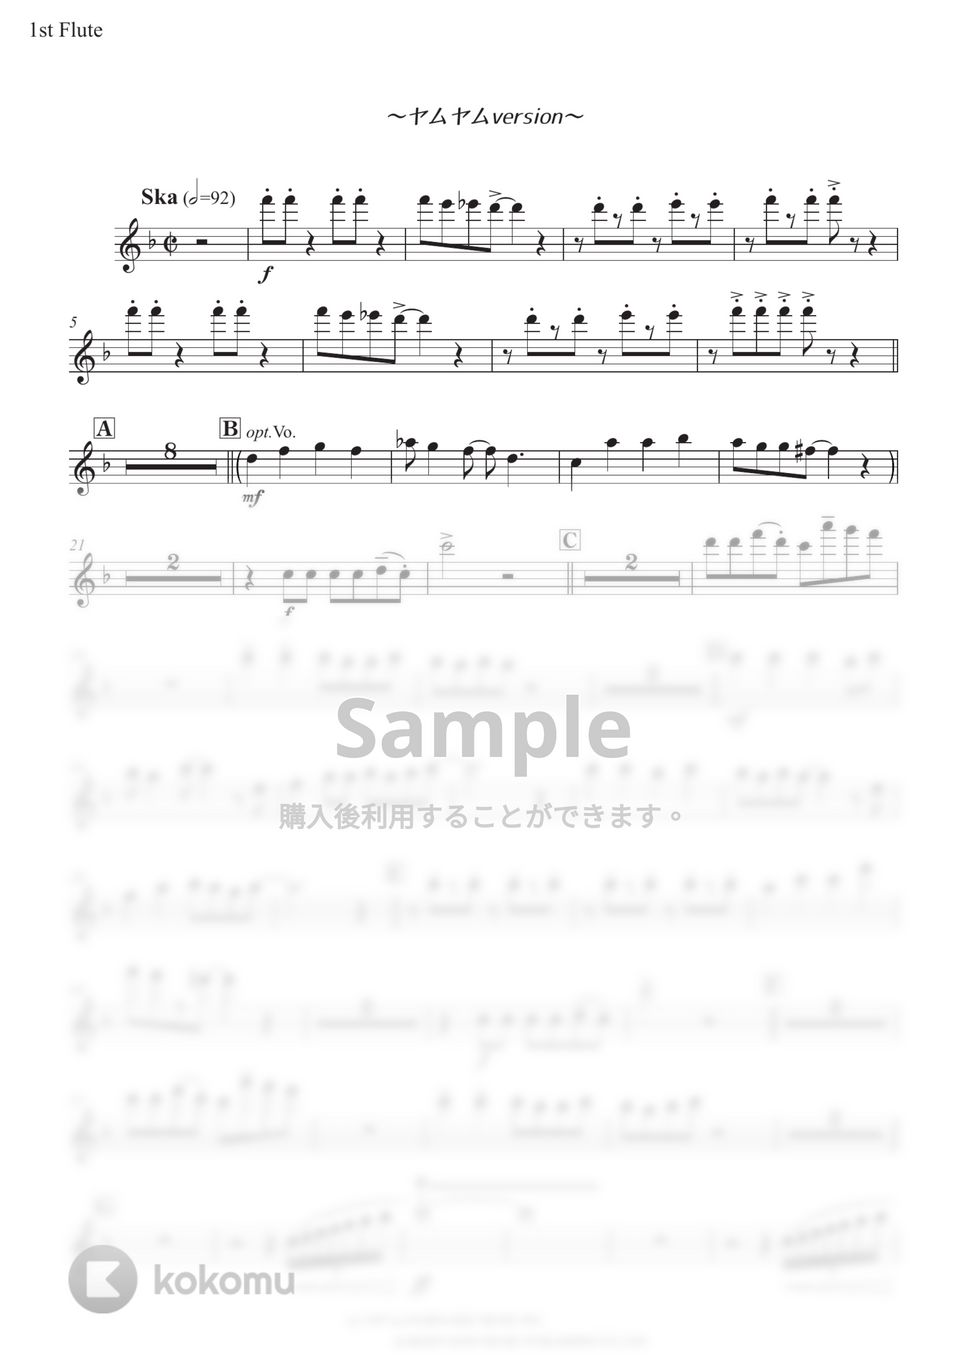 ＹＵＭ！ＹＵＭ！ＯＲＡＮＧＥ - 葛飾ラプソディー 〜ヤムヤムversion〜 (吹奏楽+ボーカル/初級) 楽譜 by 伊藤大騎